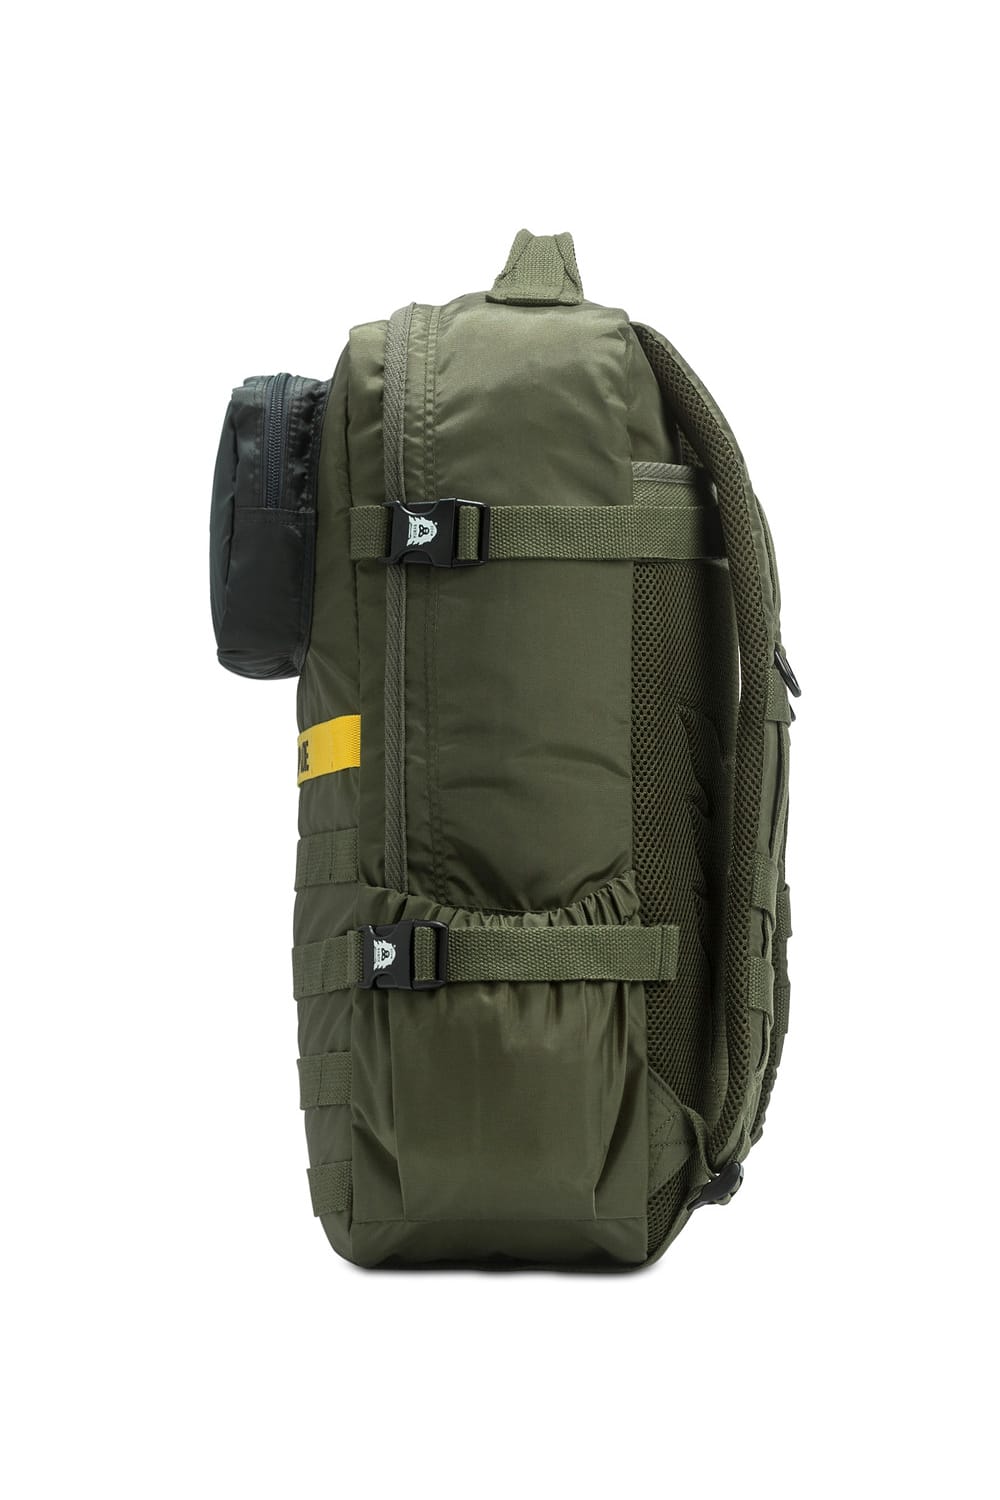 HUMAN MADE Military Backpack & Shoulder Bag | Hypebeast